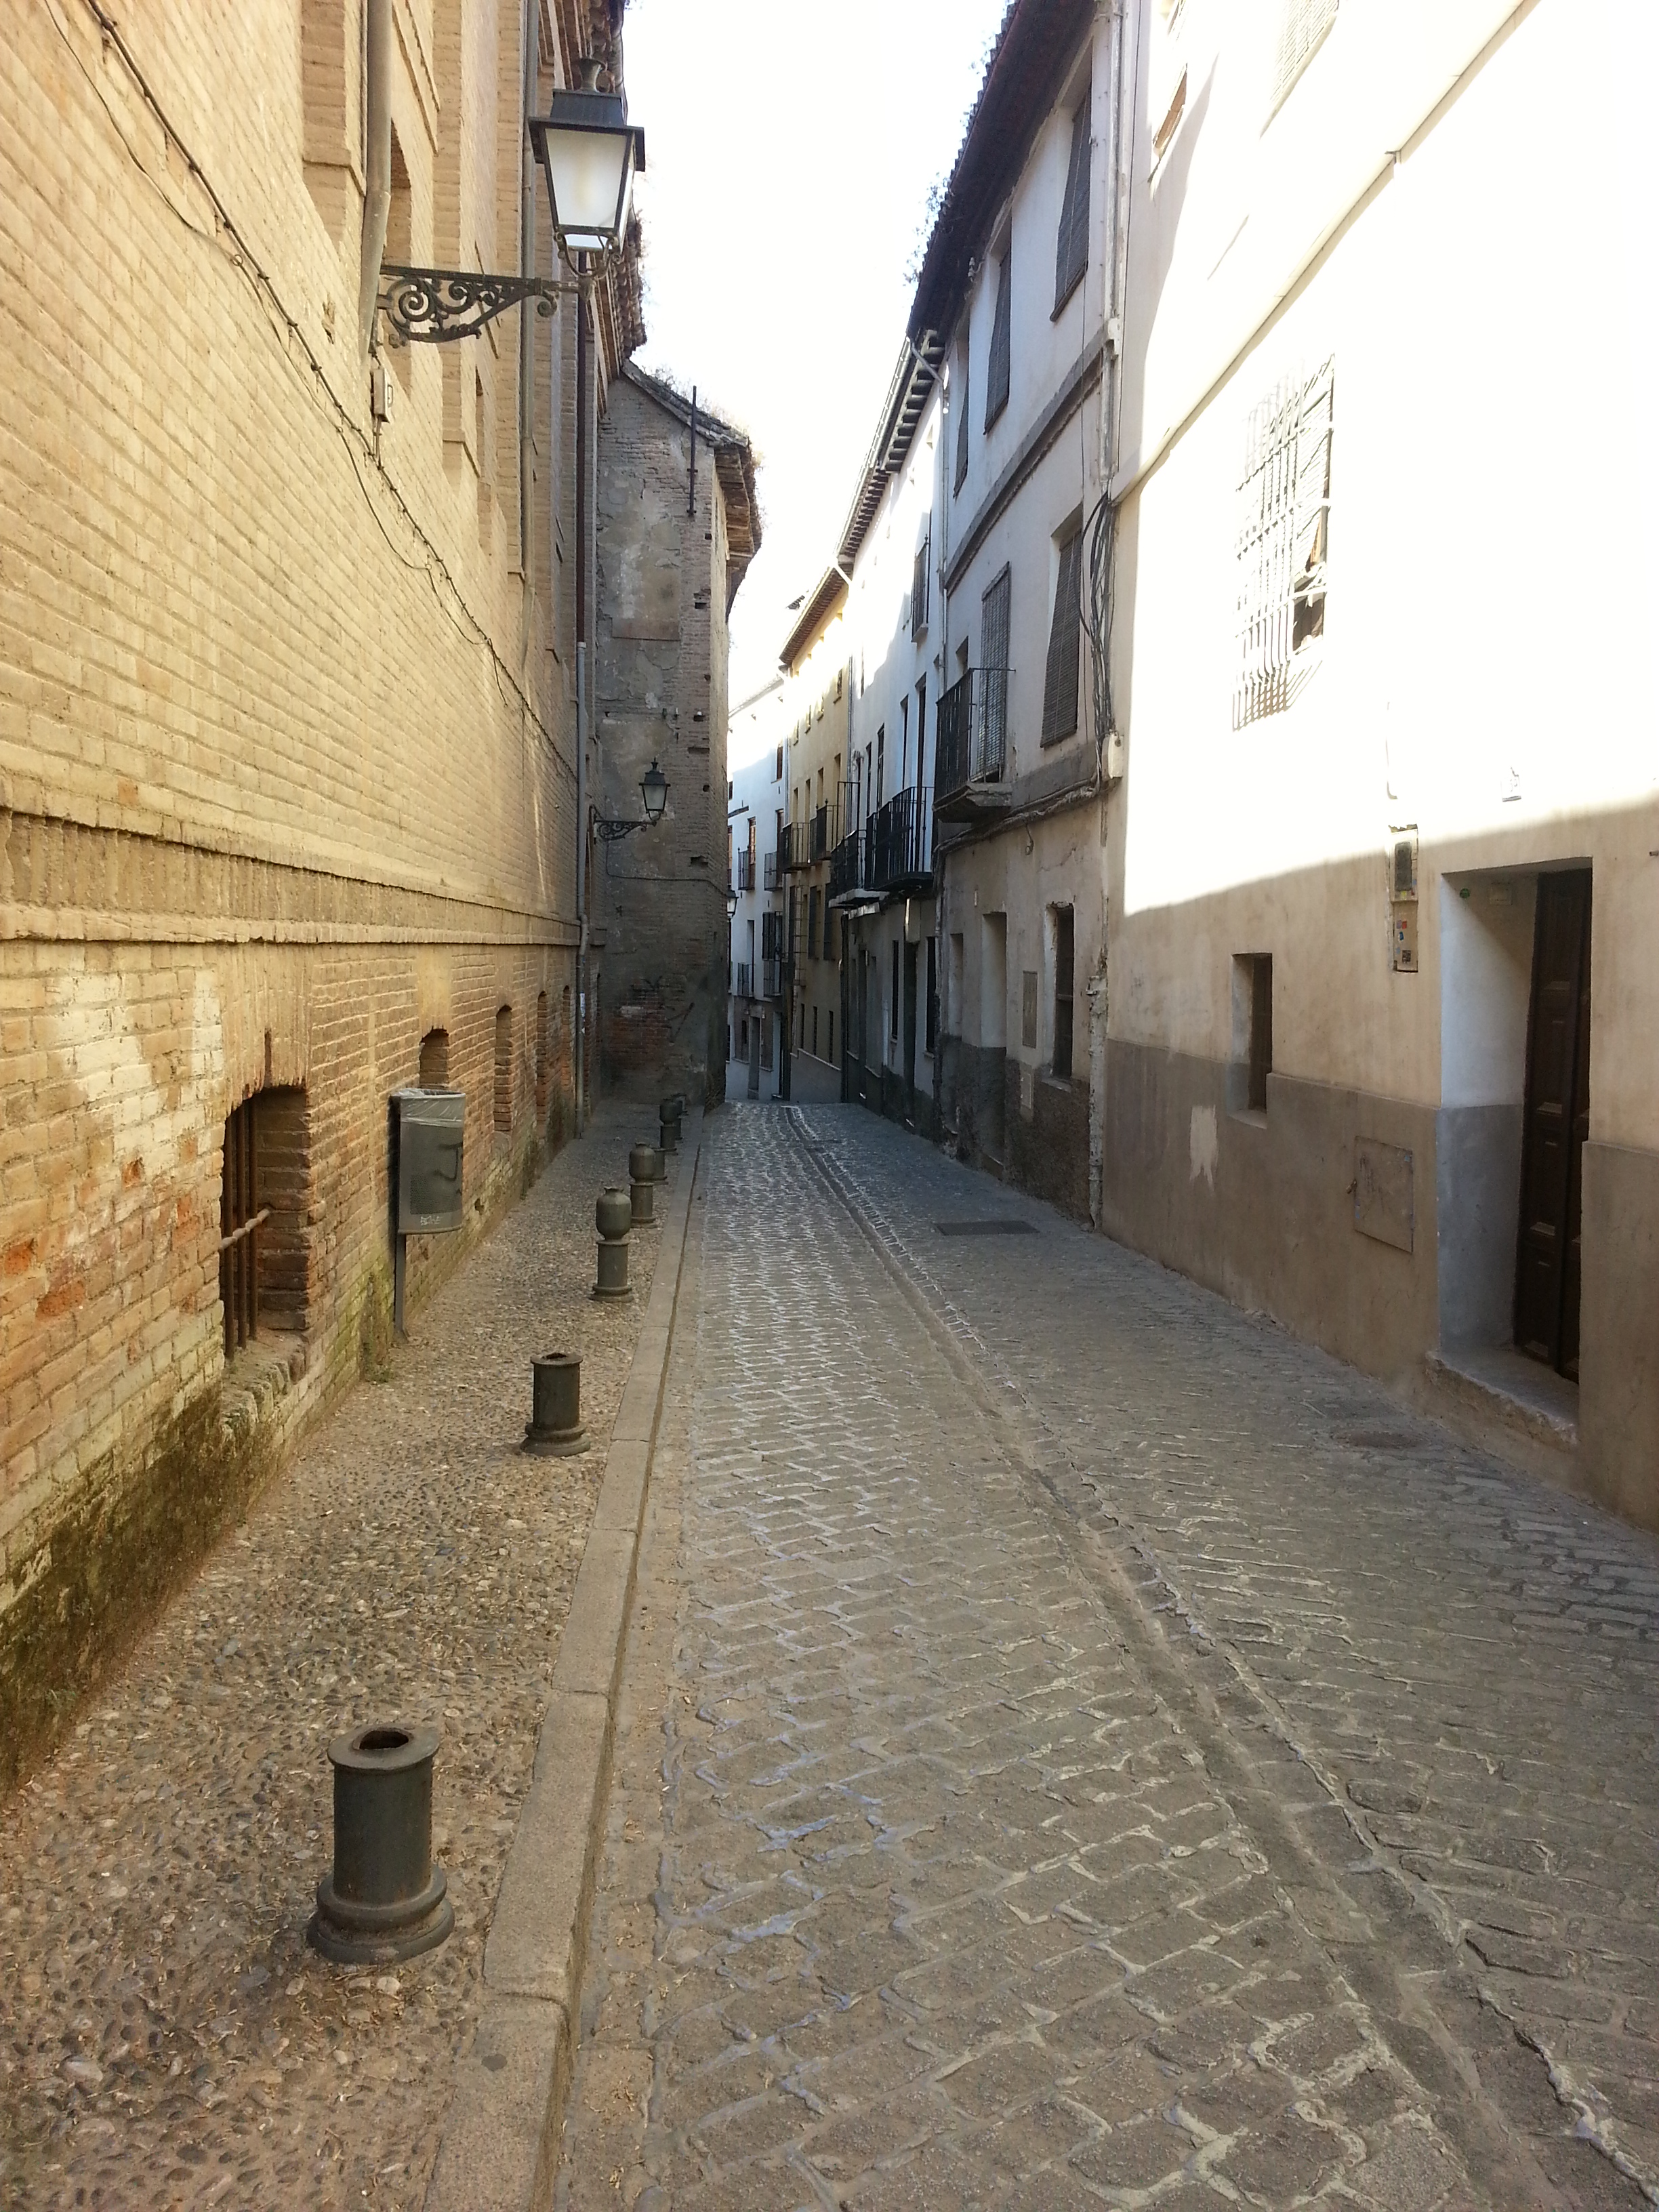 Gutter in centre of street in Granada's Al-Bayzin